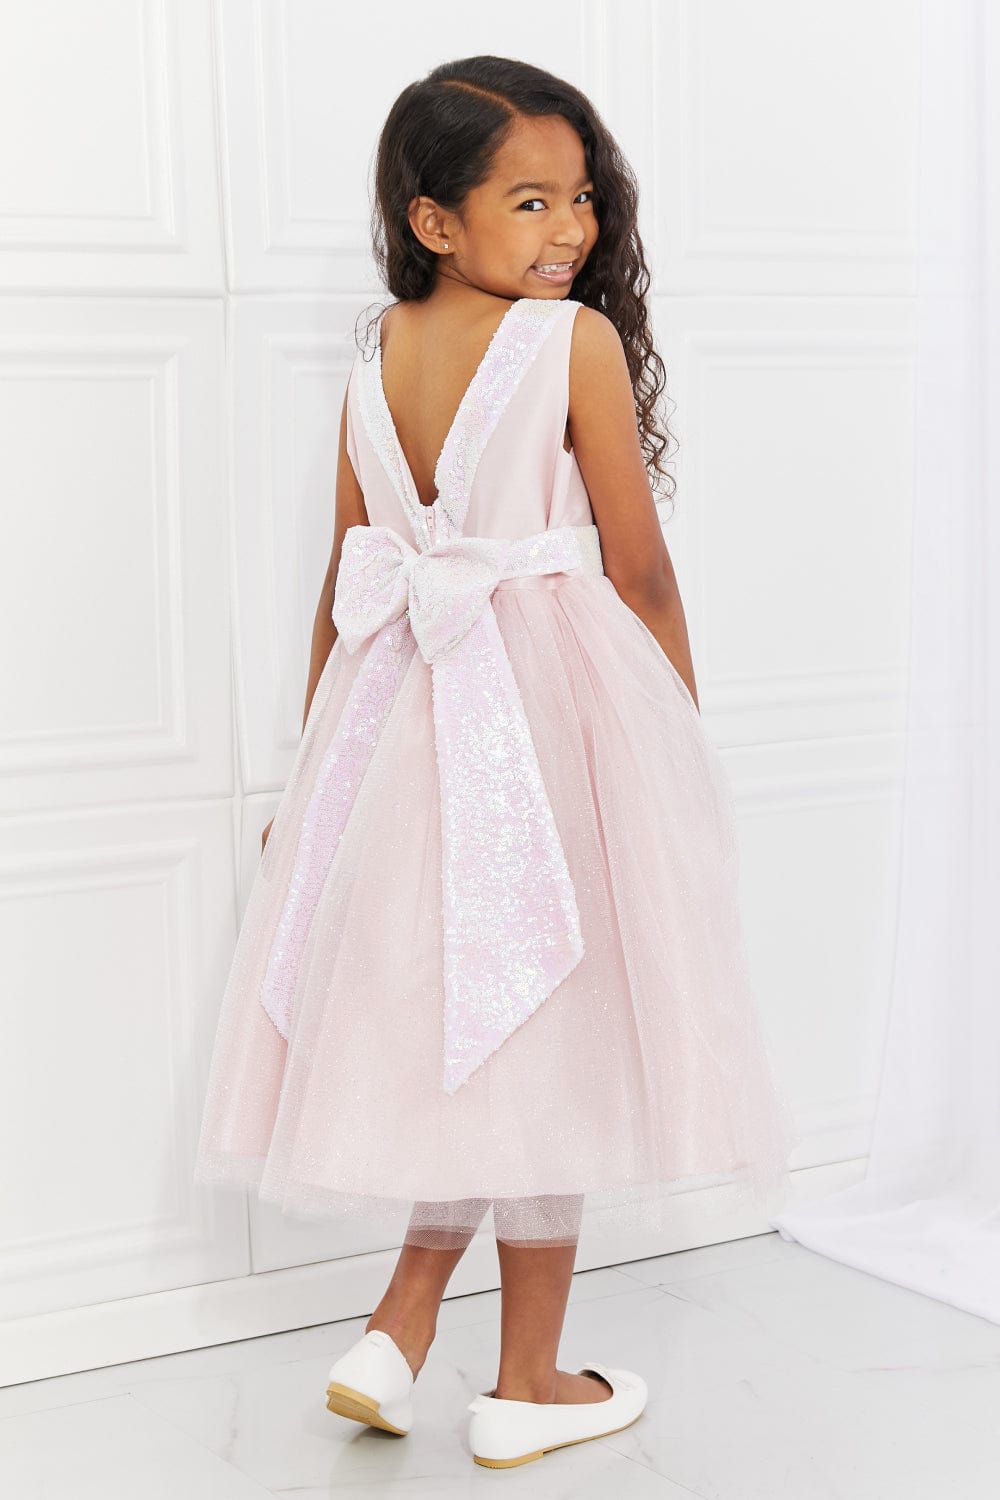 Kid's Dream Little Miss Classy Tutu Dress in Pink